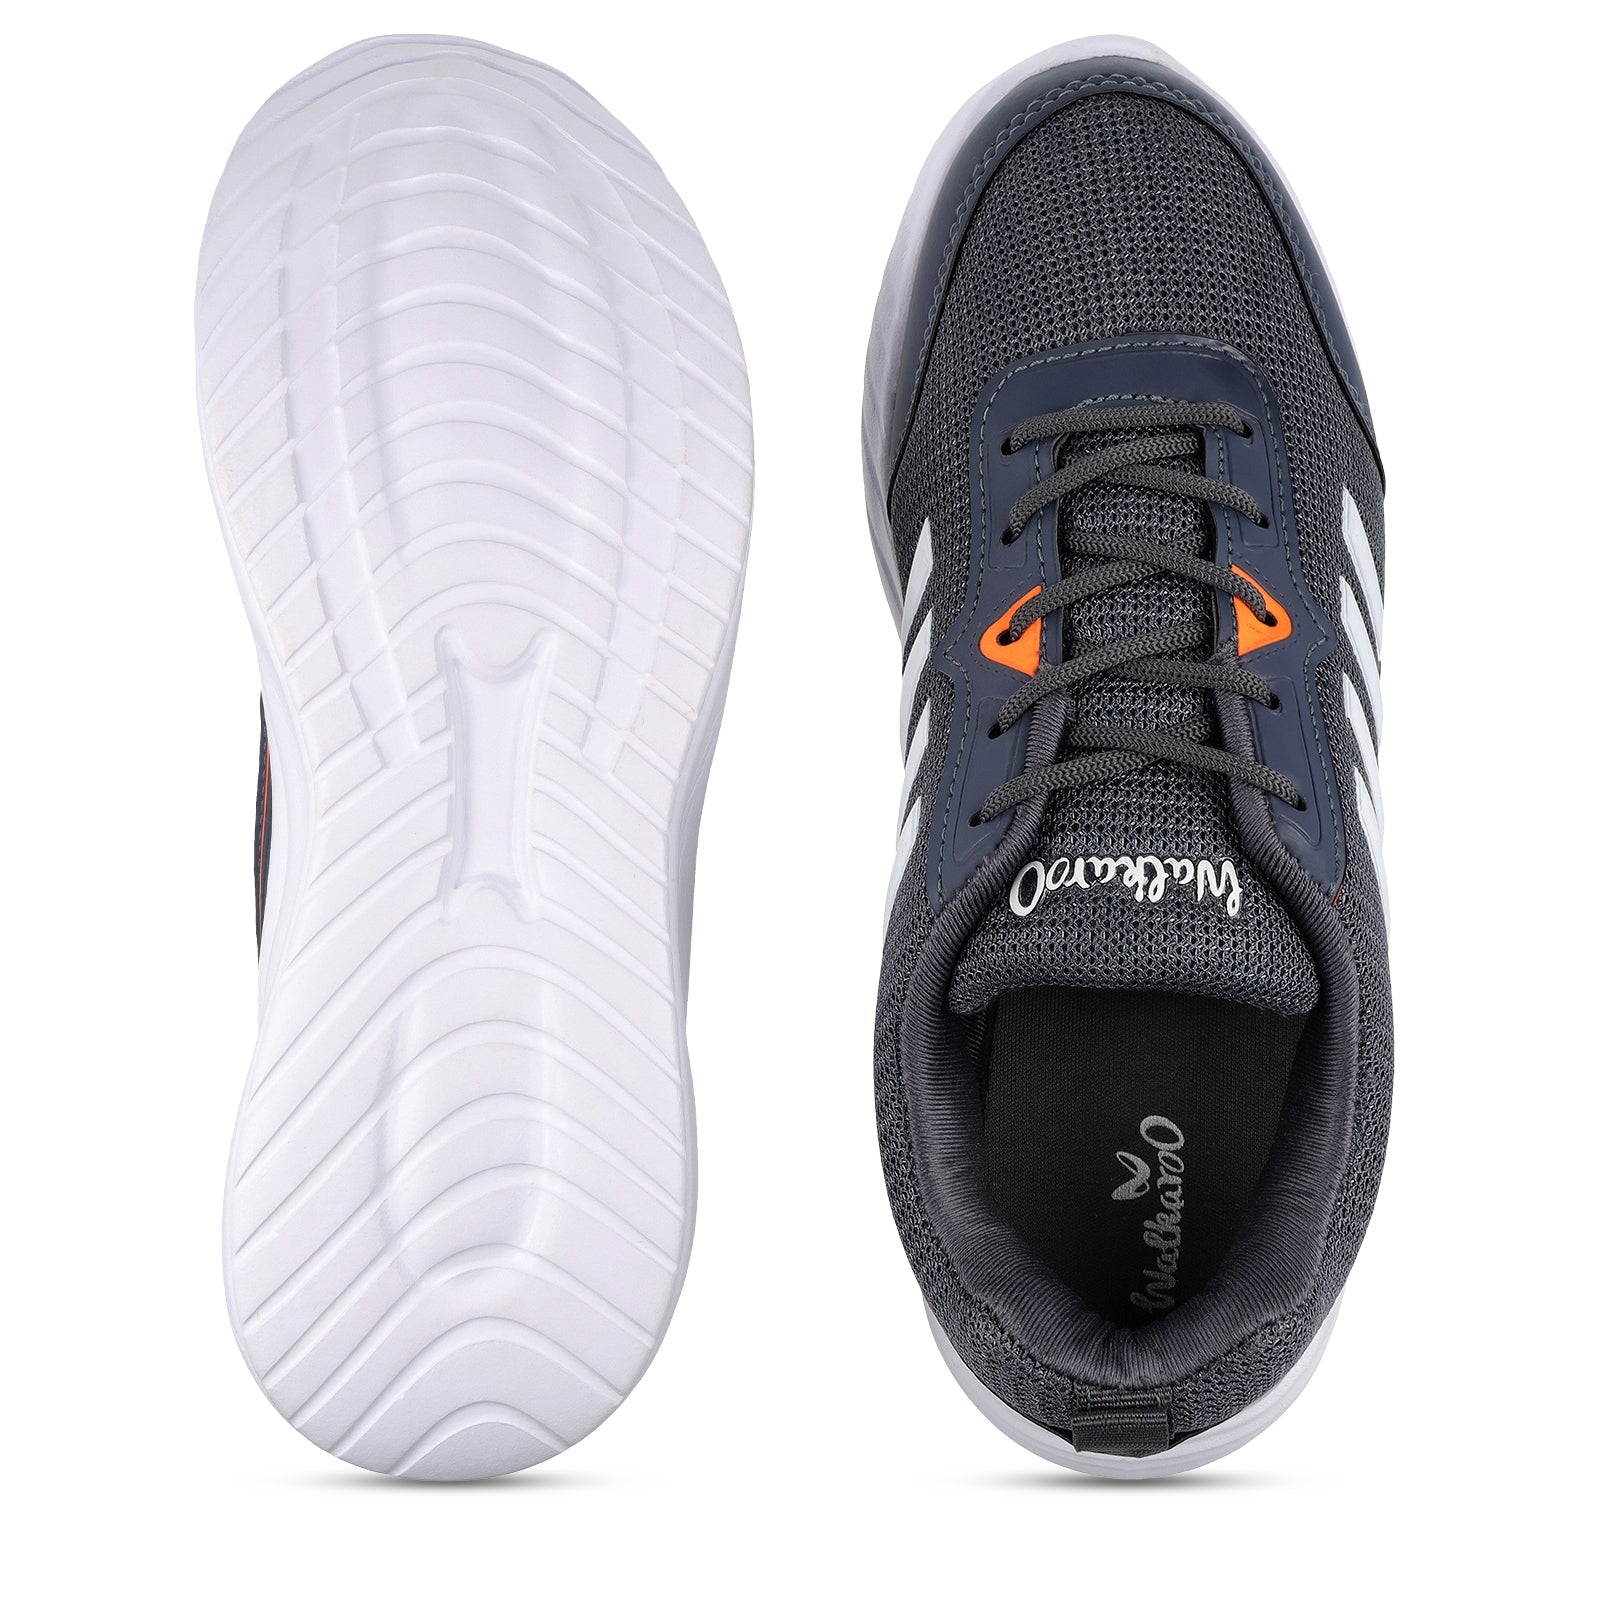 Which is your favorite? #Walkaroo #ForAllWalksOfLife #Footwear #VKC | Vans  classic slip on sneaker, Slip on sneaker, Vans classic